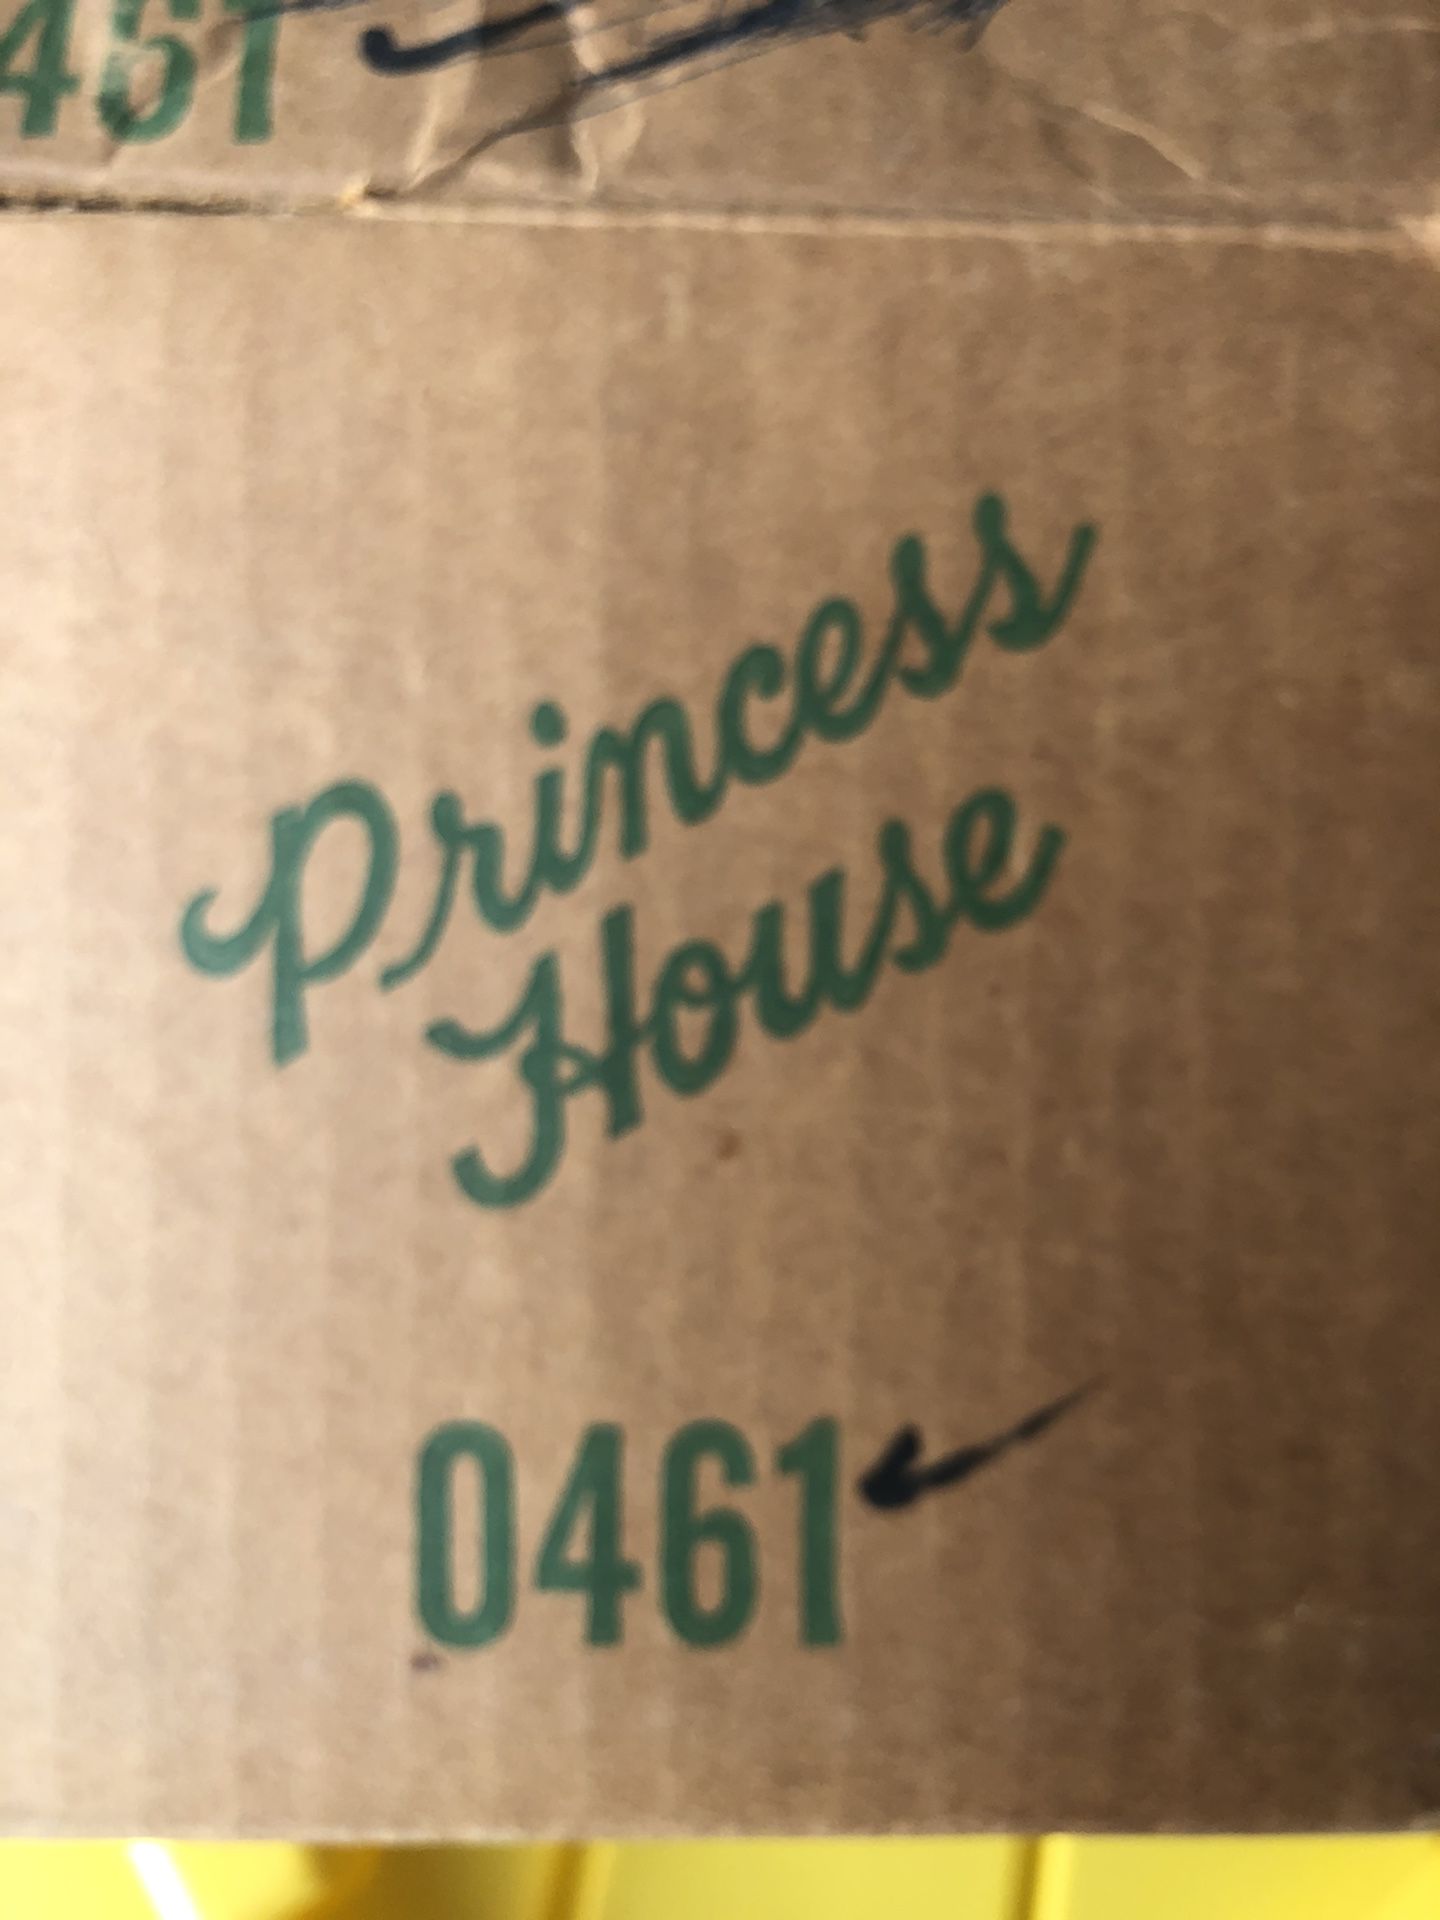 Princess House 0461